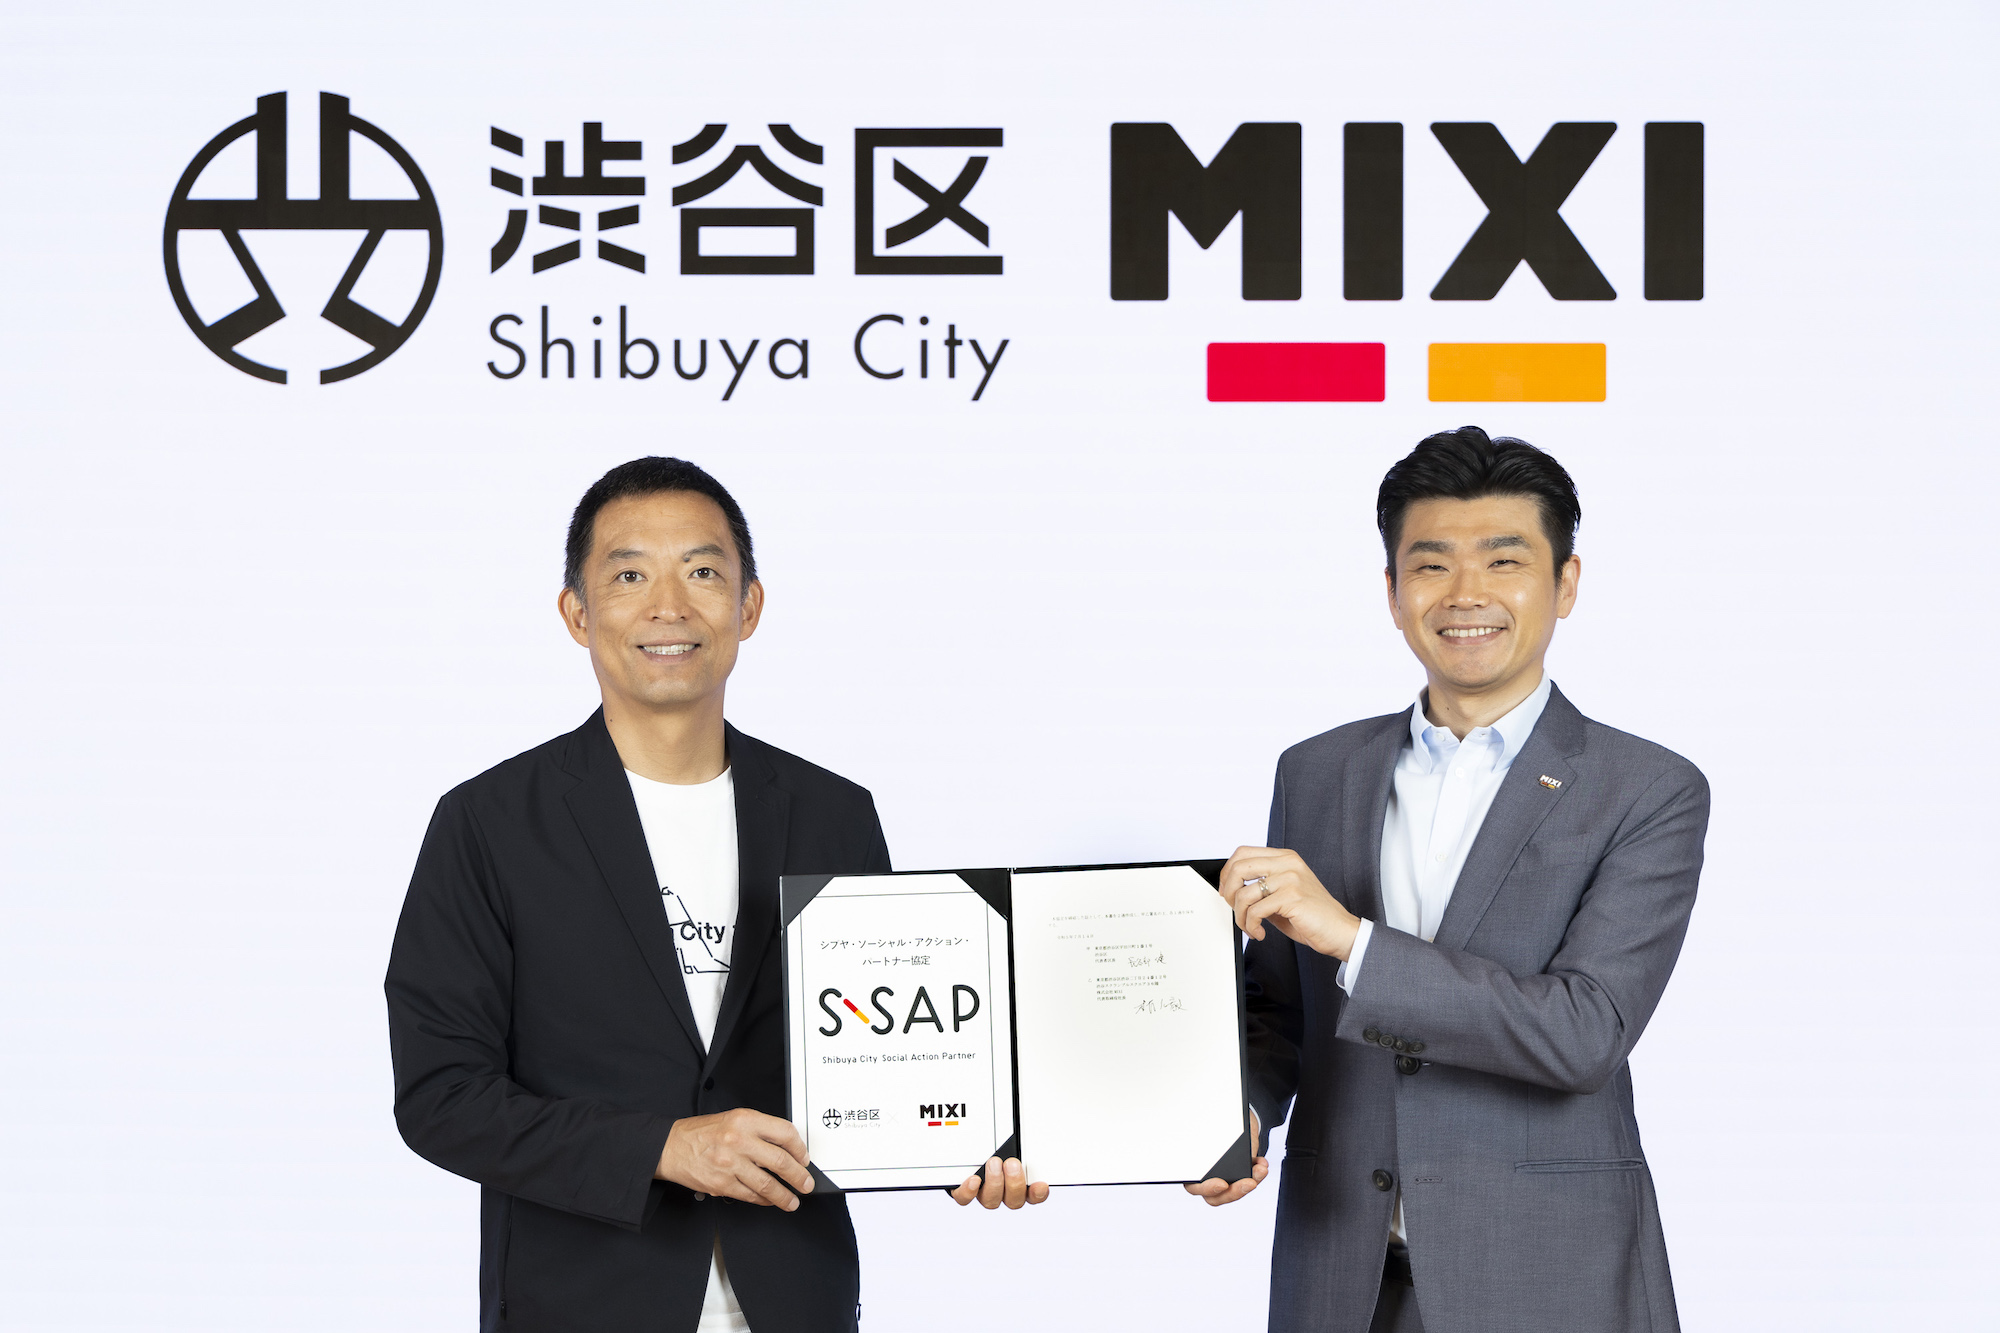 S-SAP Agreement Entered With Shibuya City